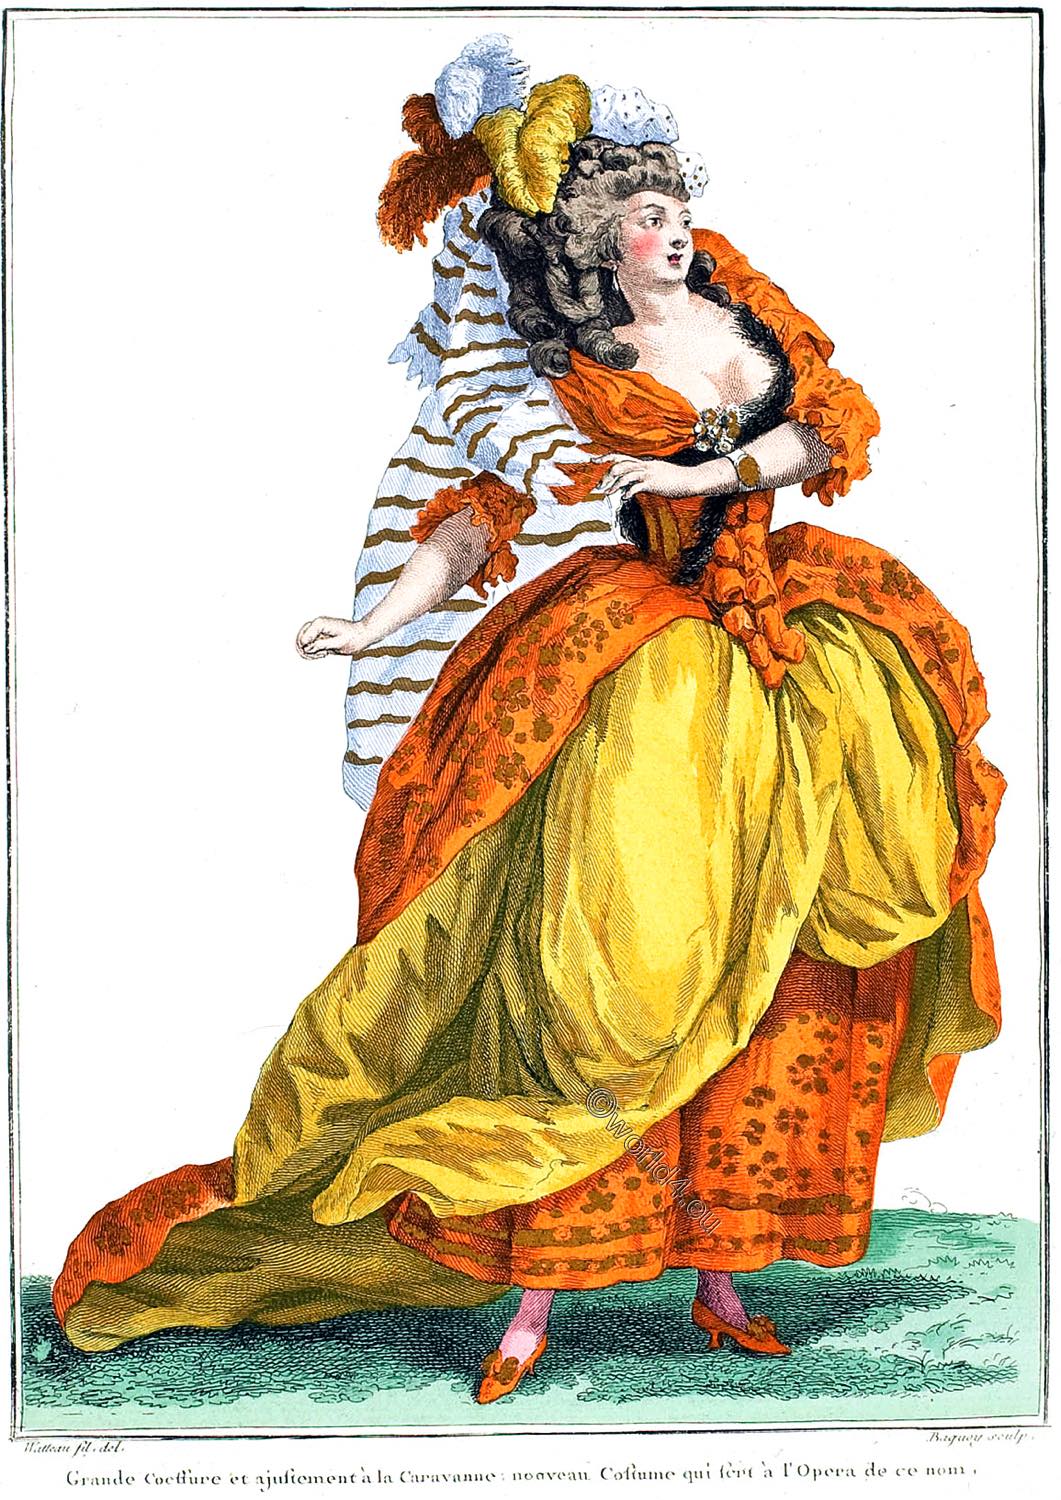 coeffure, Caravanne, Costume, Opera, Rococo, France, fashion,